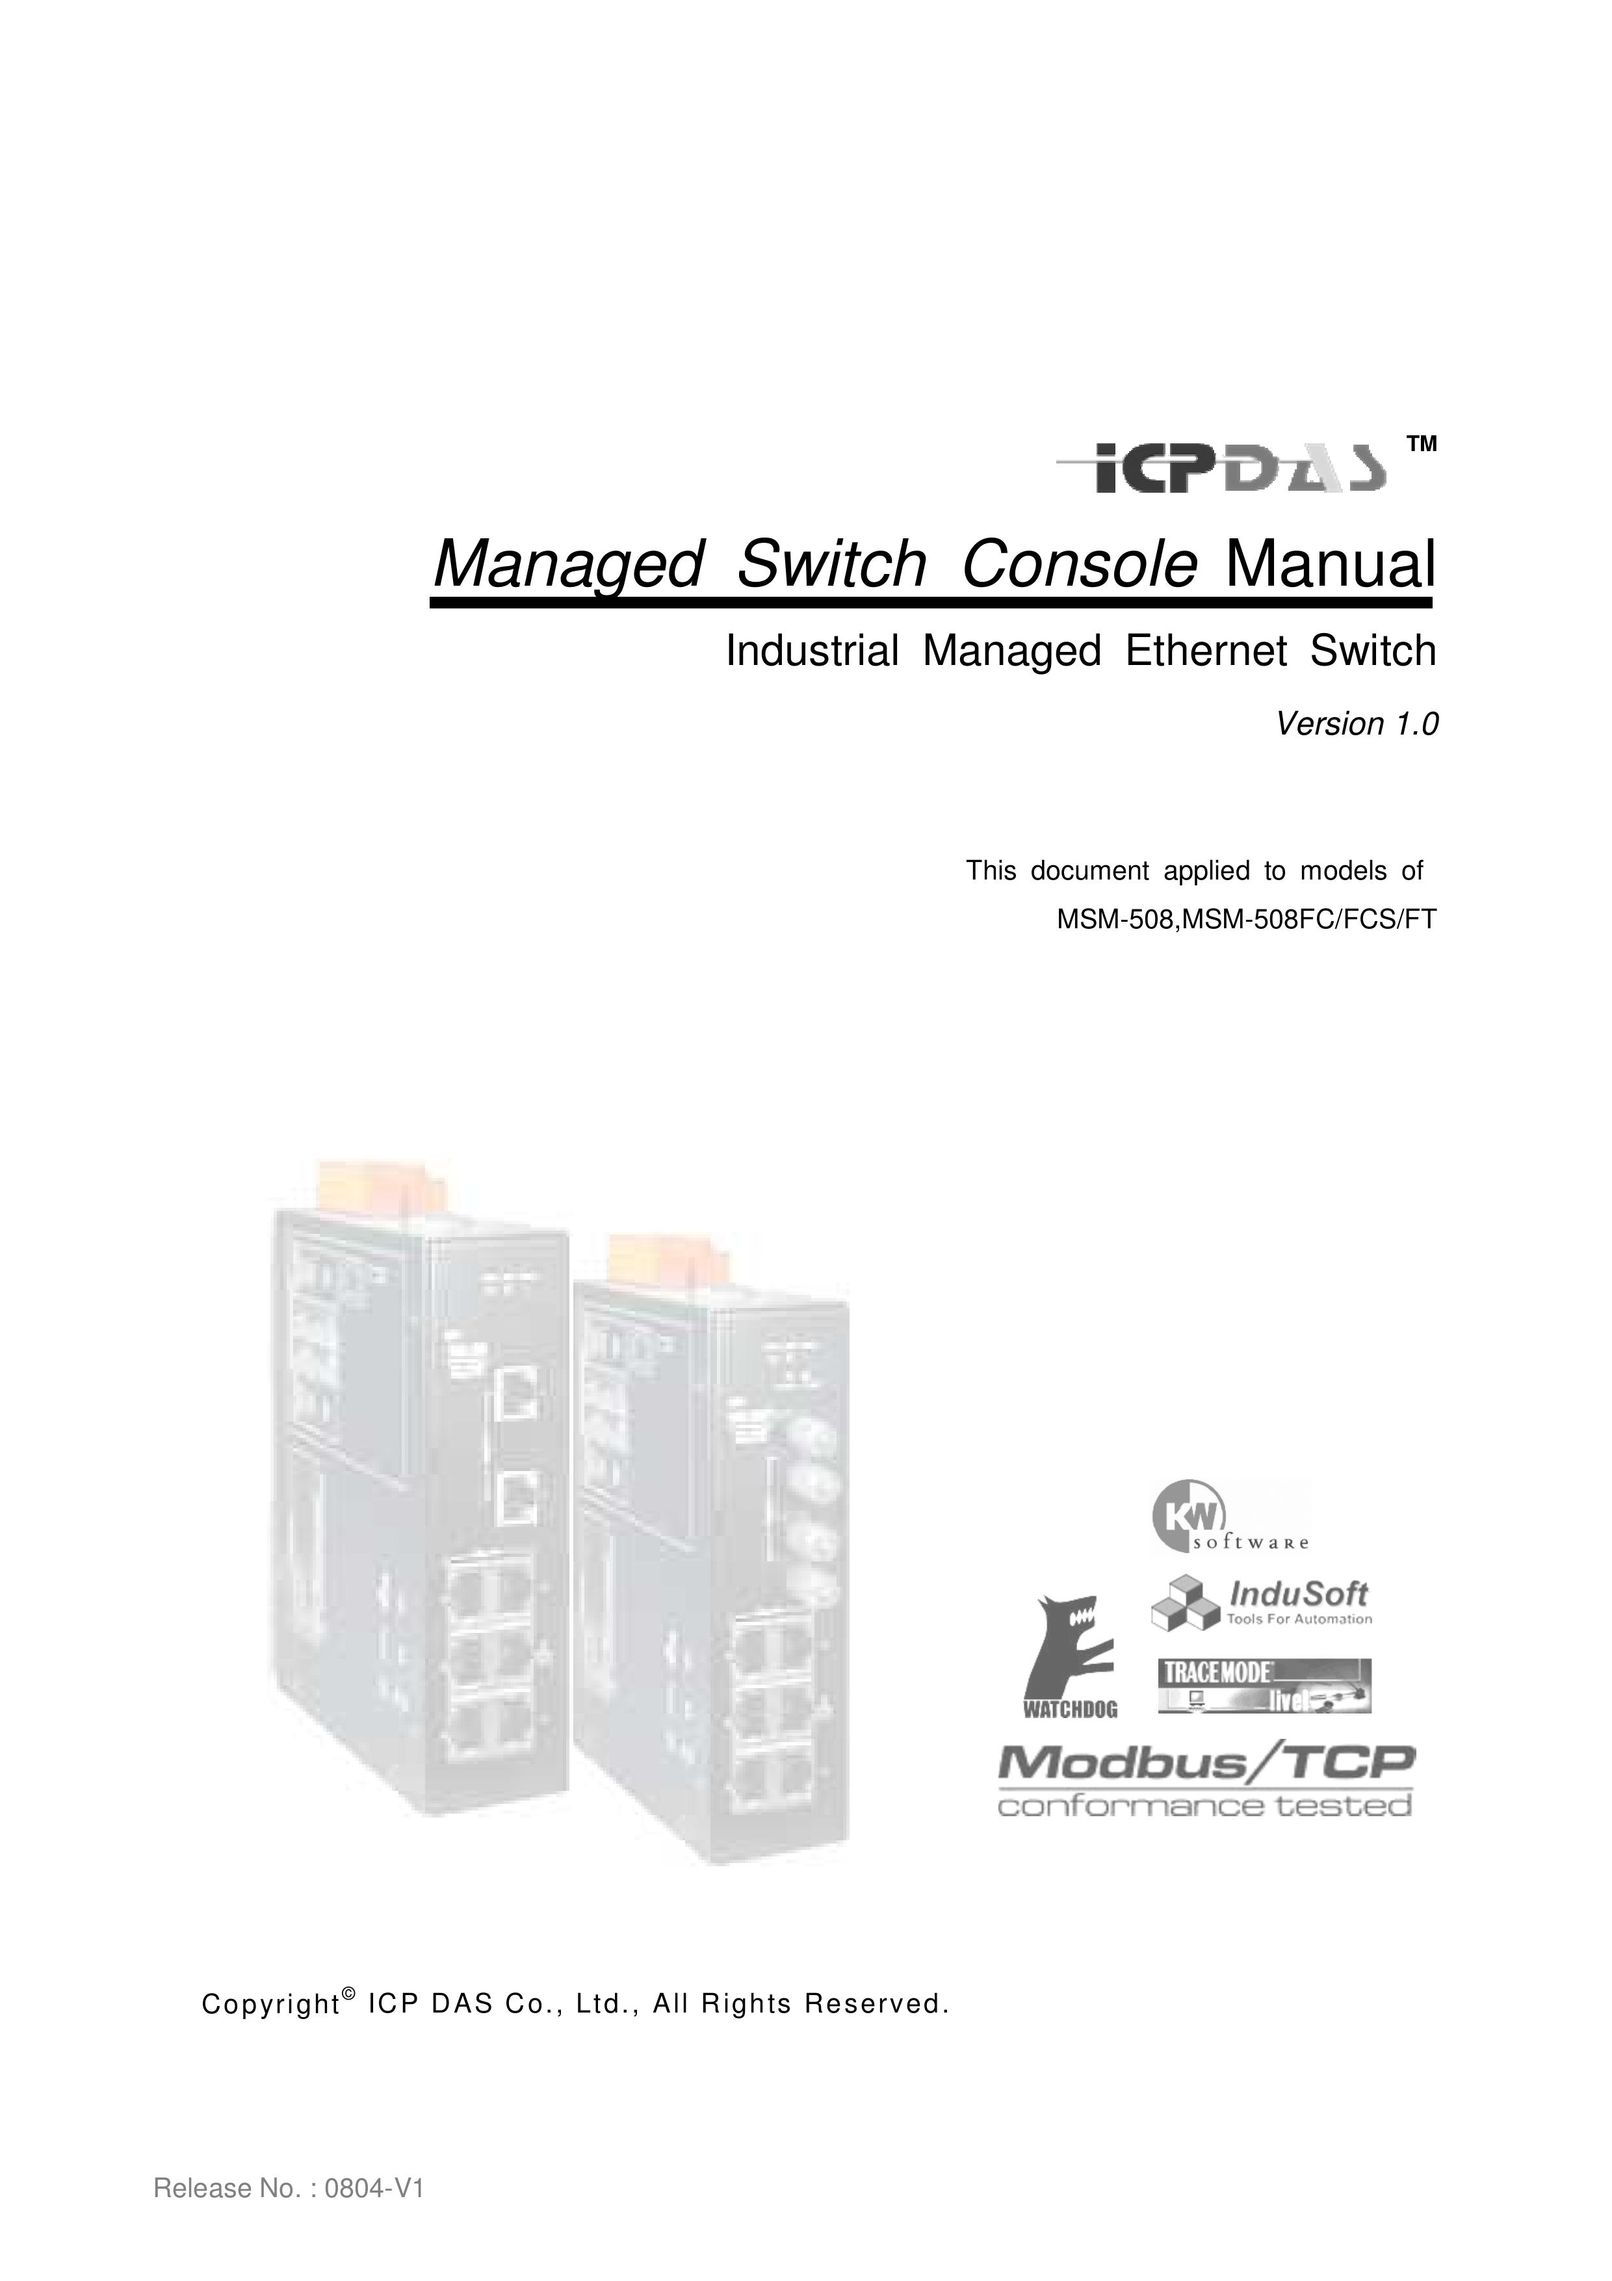 ICP DAS USA MSM-508FCS Switch User Manual